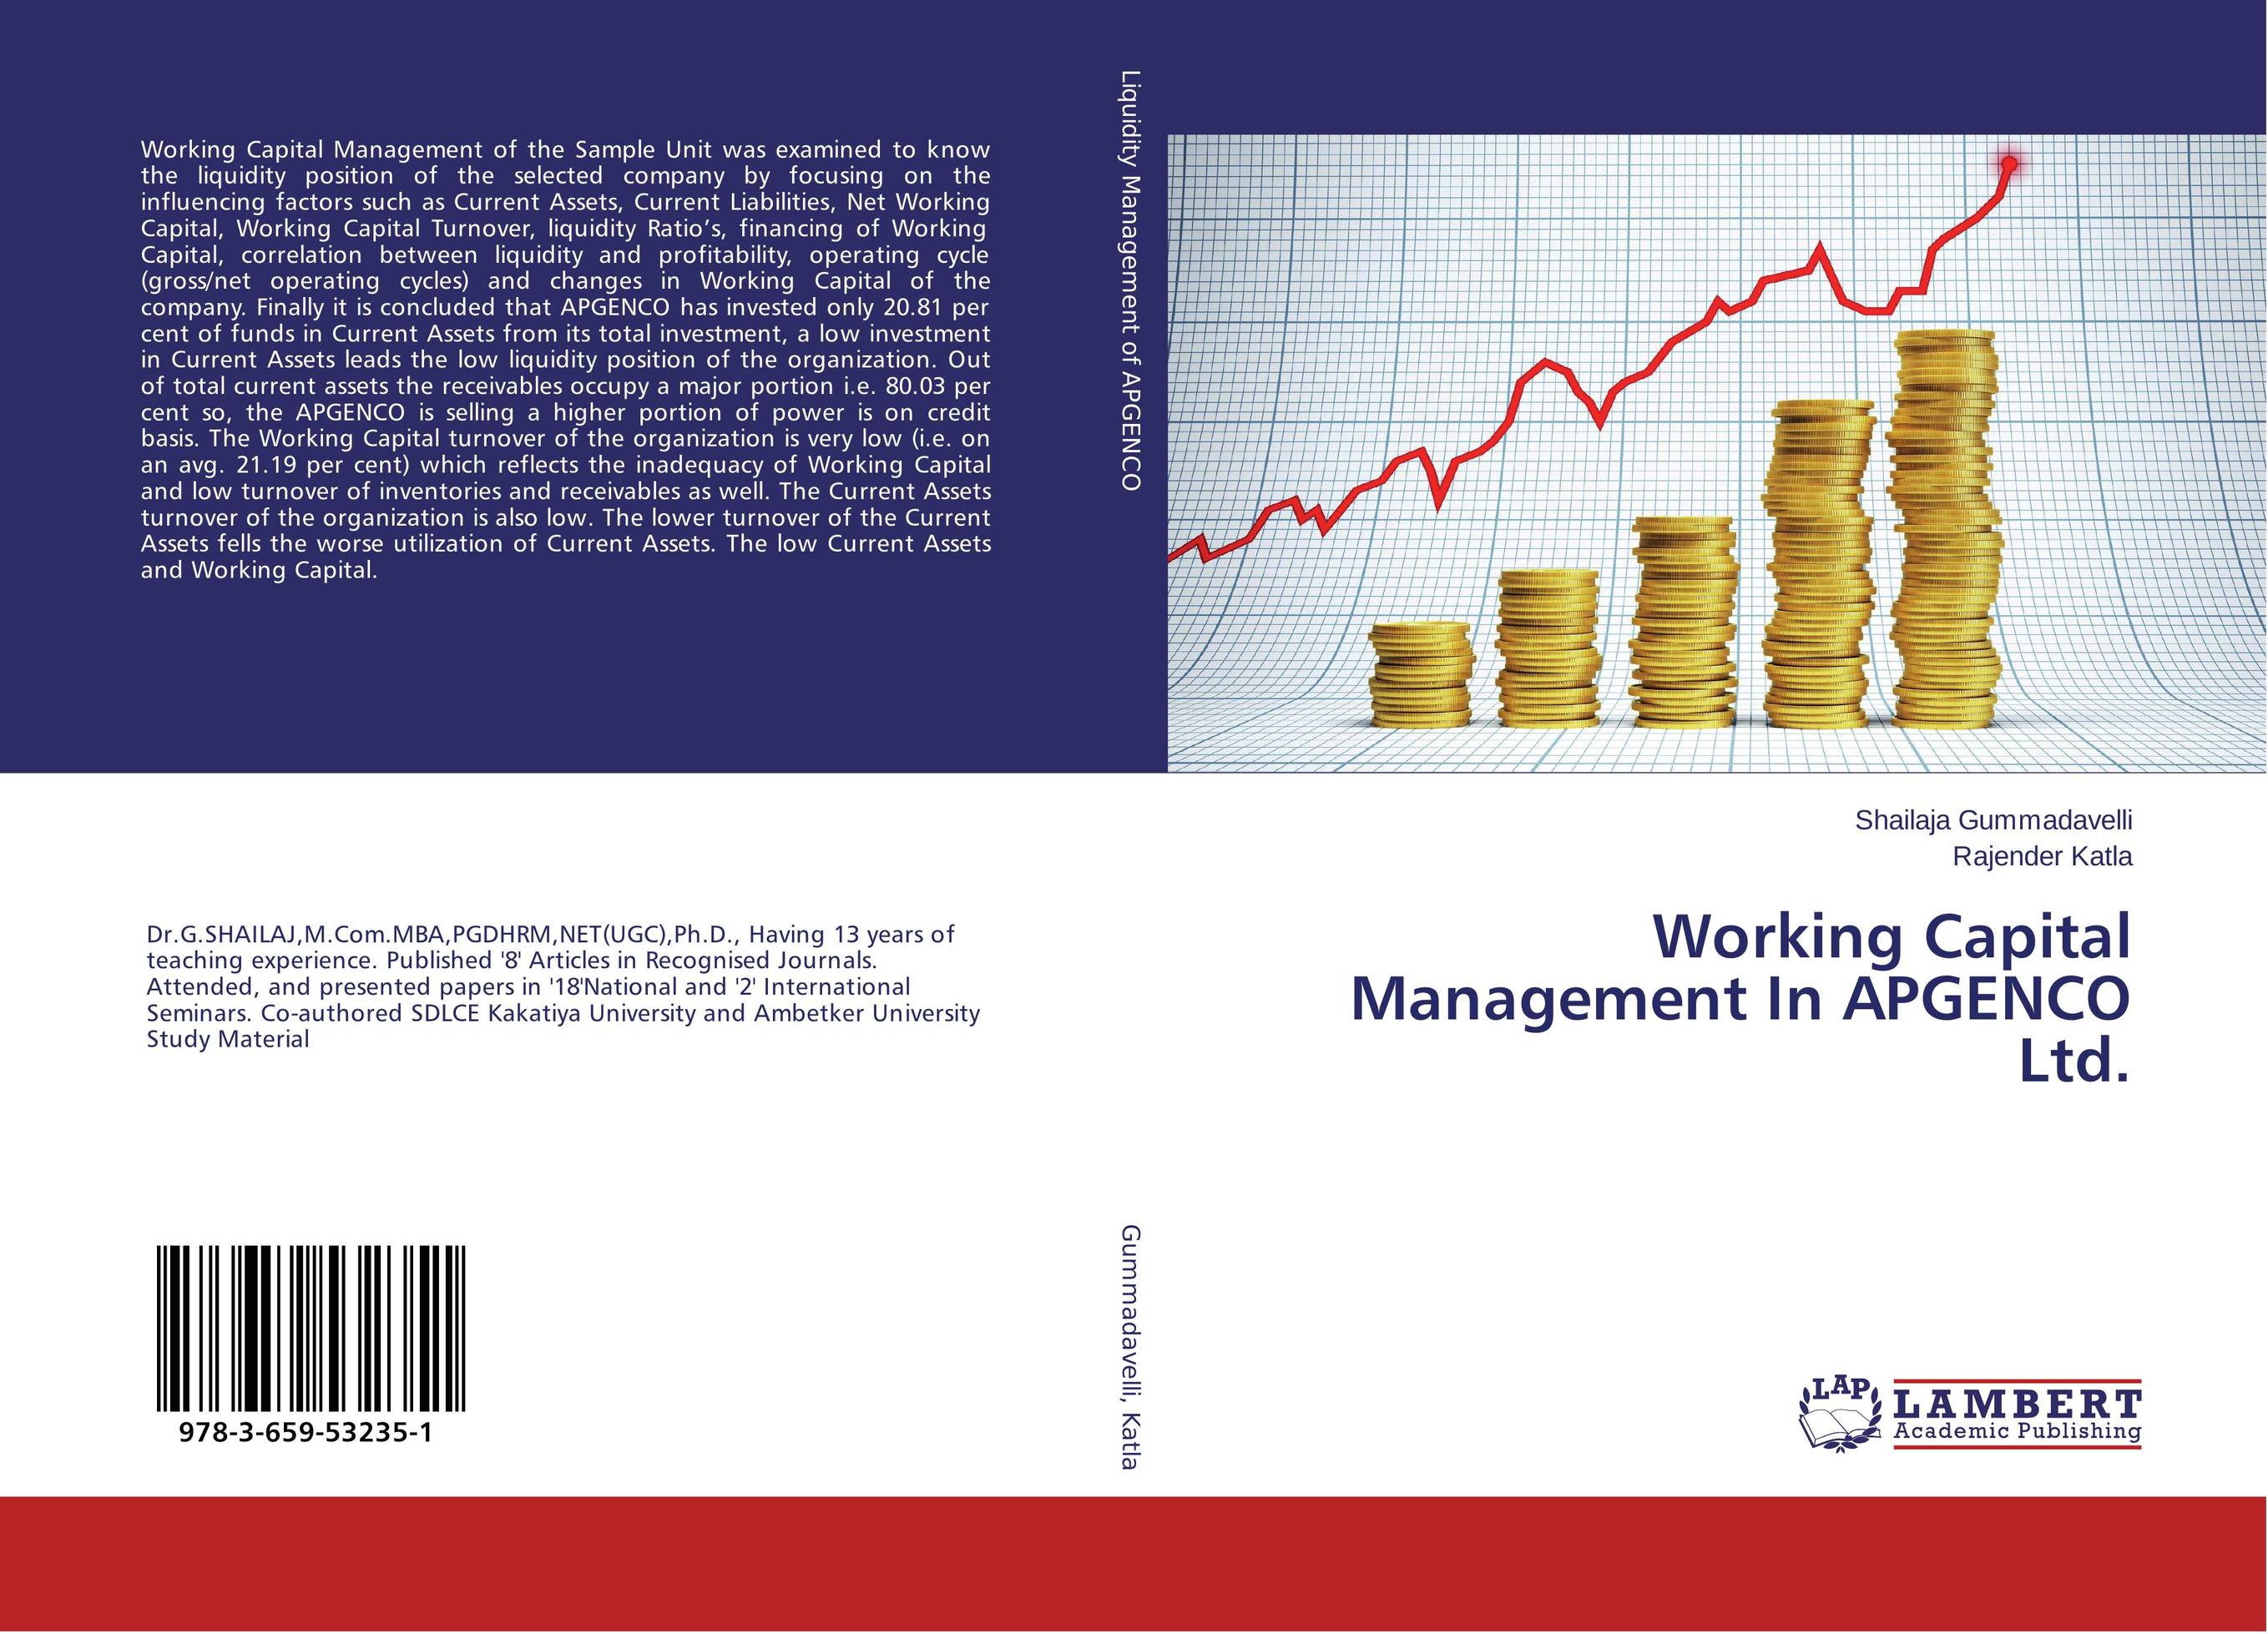 Working Capital Management In APGENCO Ltd.